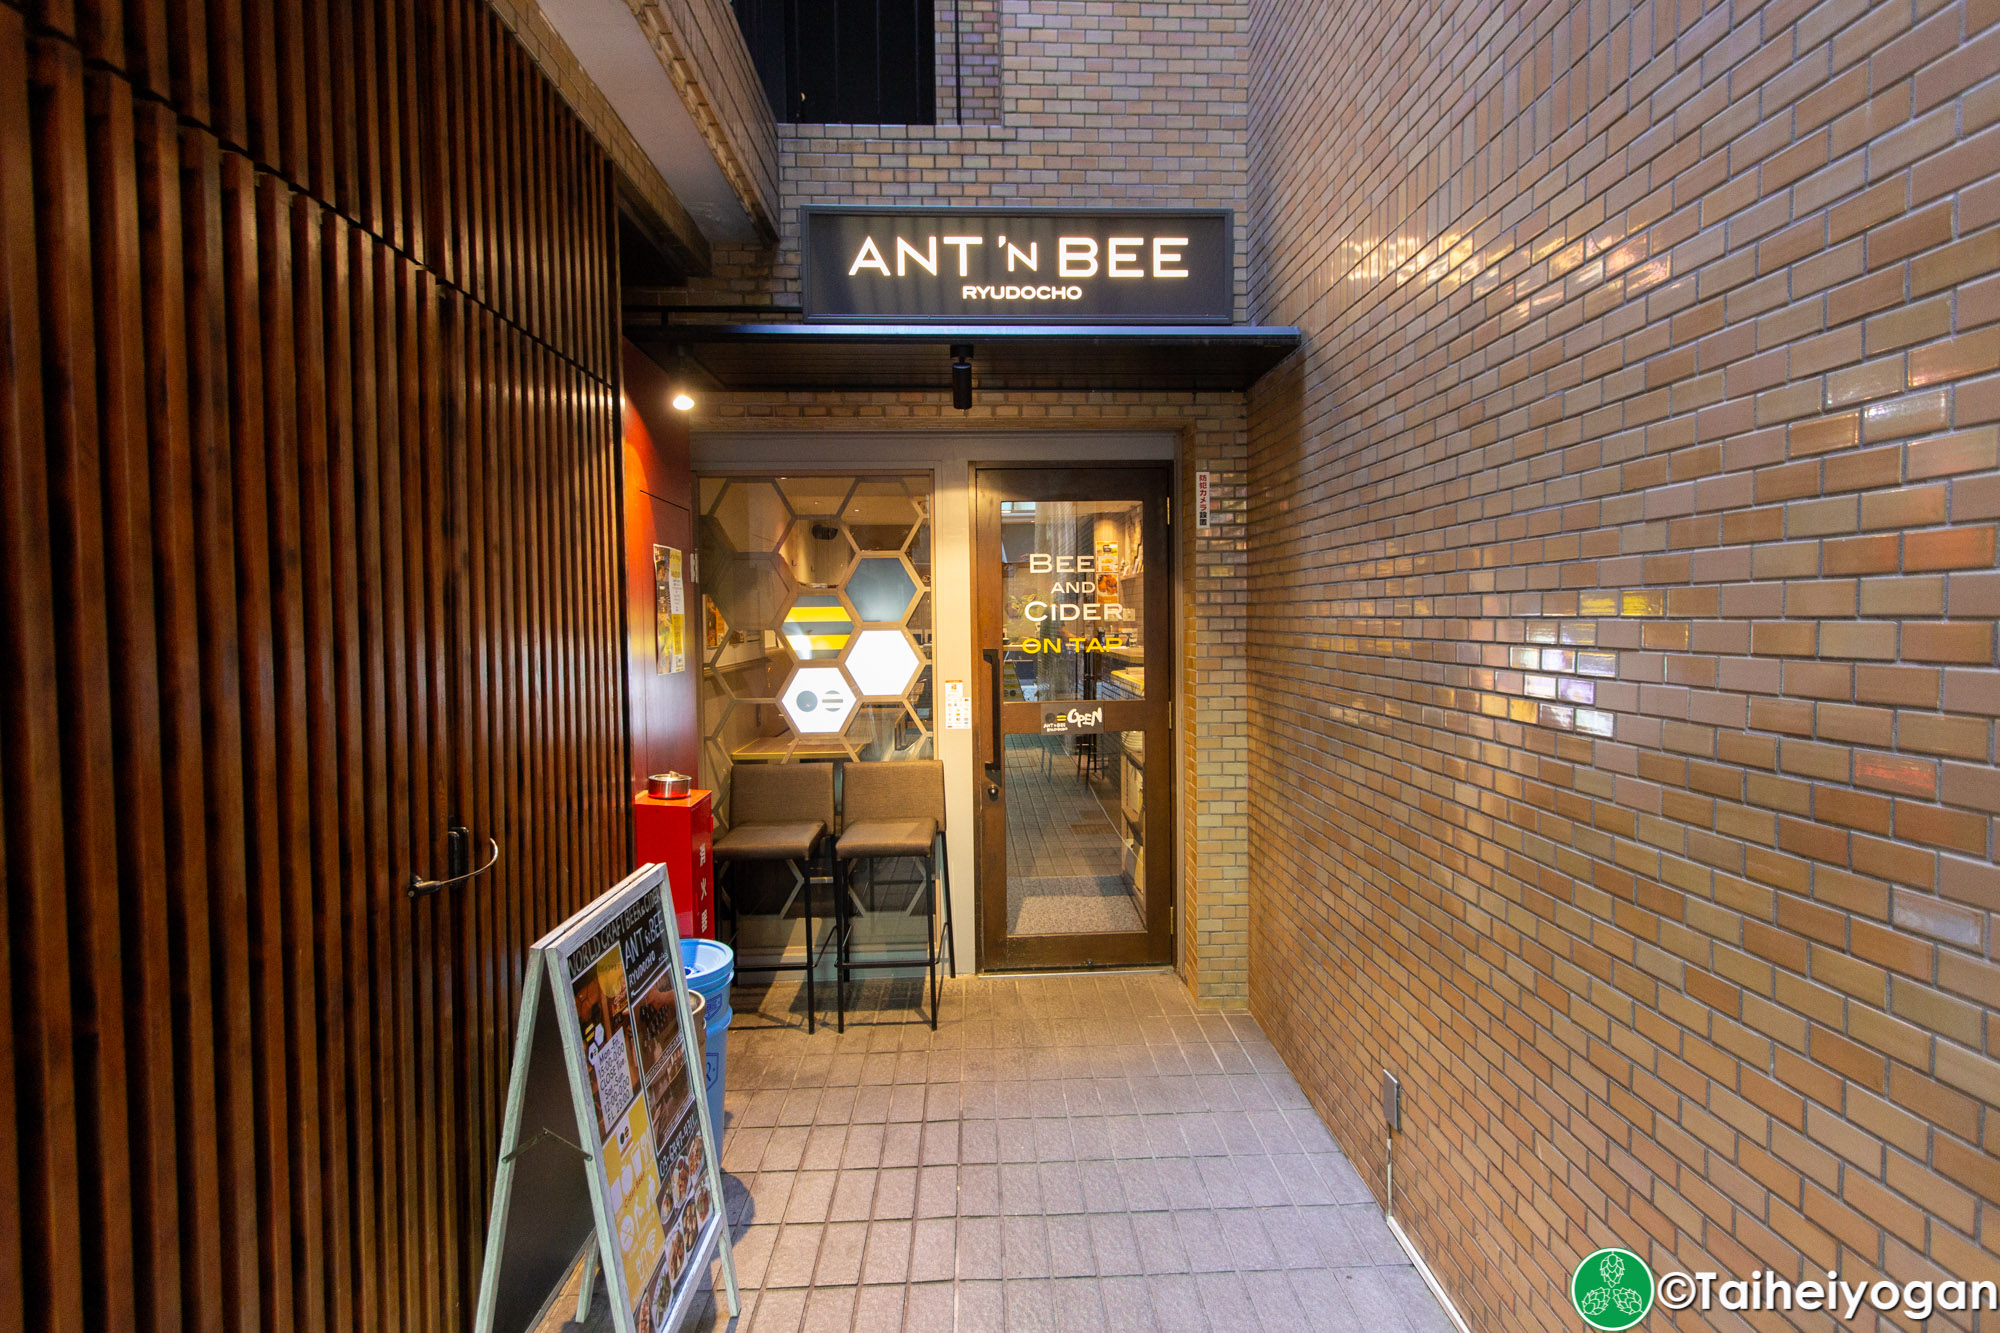 Ant ‘n Bee (龍土町店・Ryudocho) - Entrance